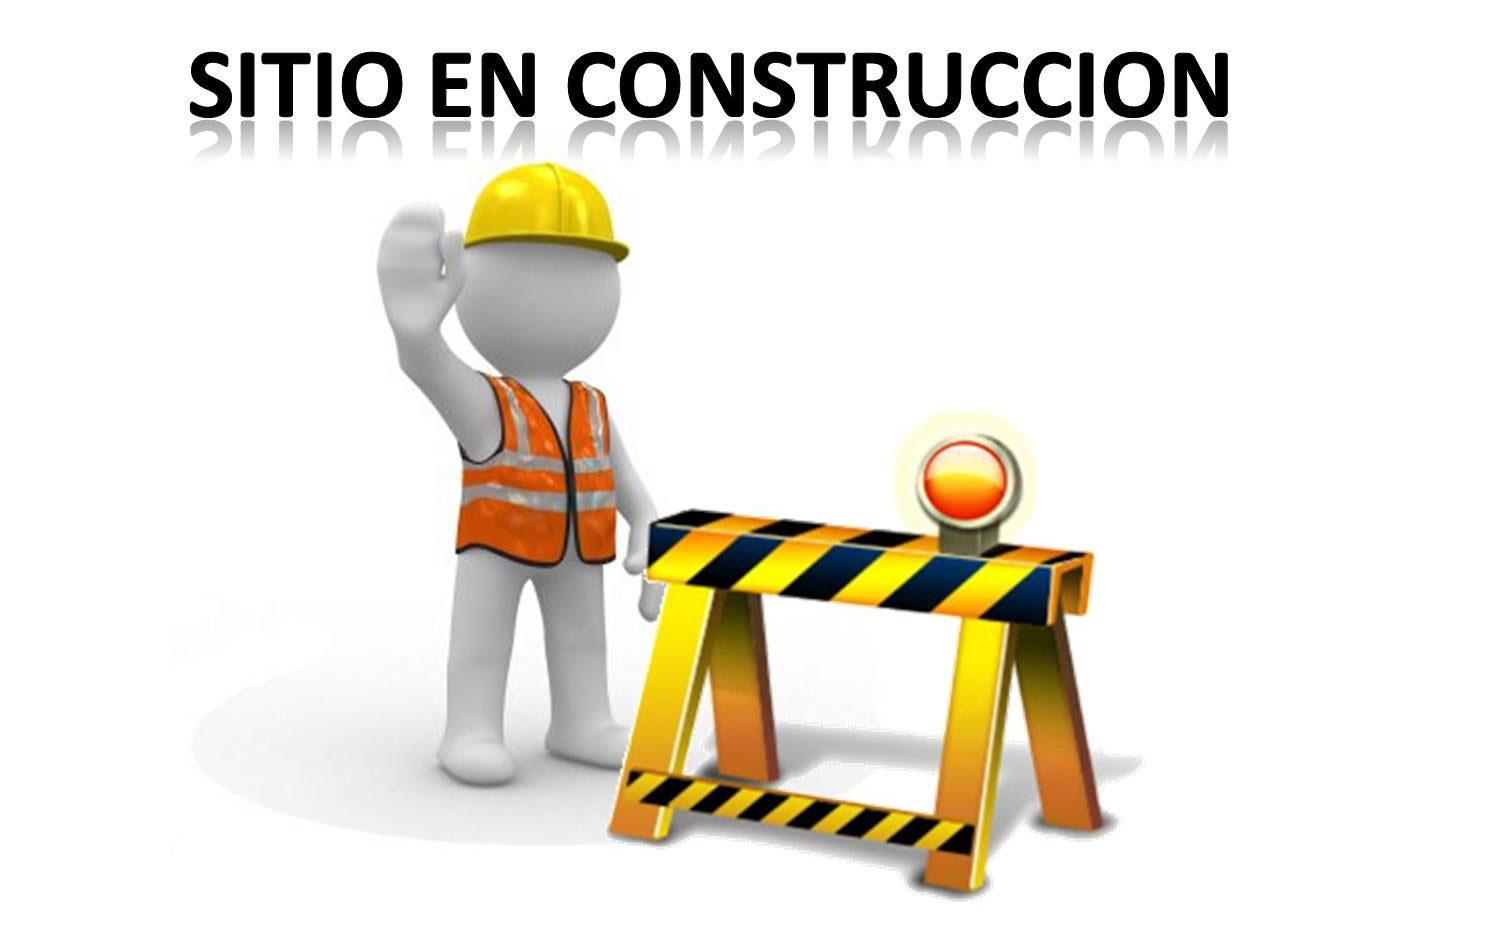 En construción